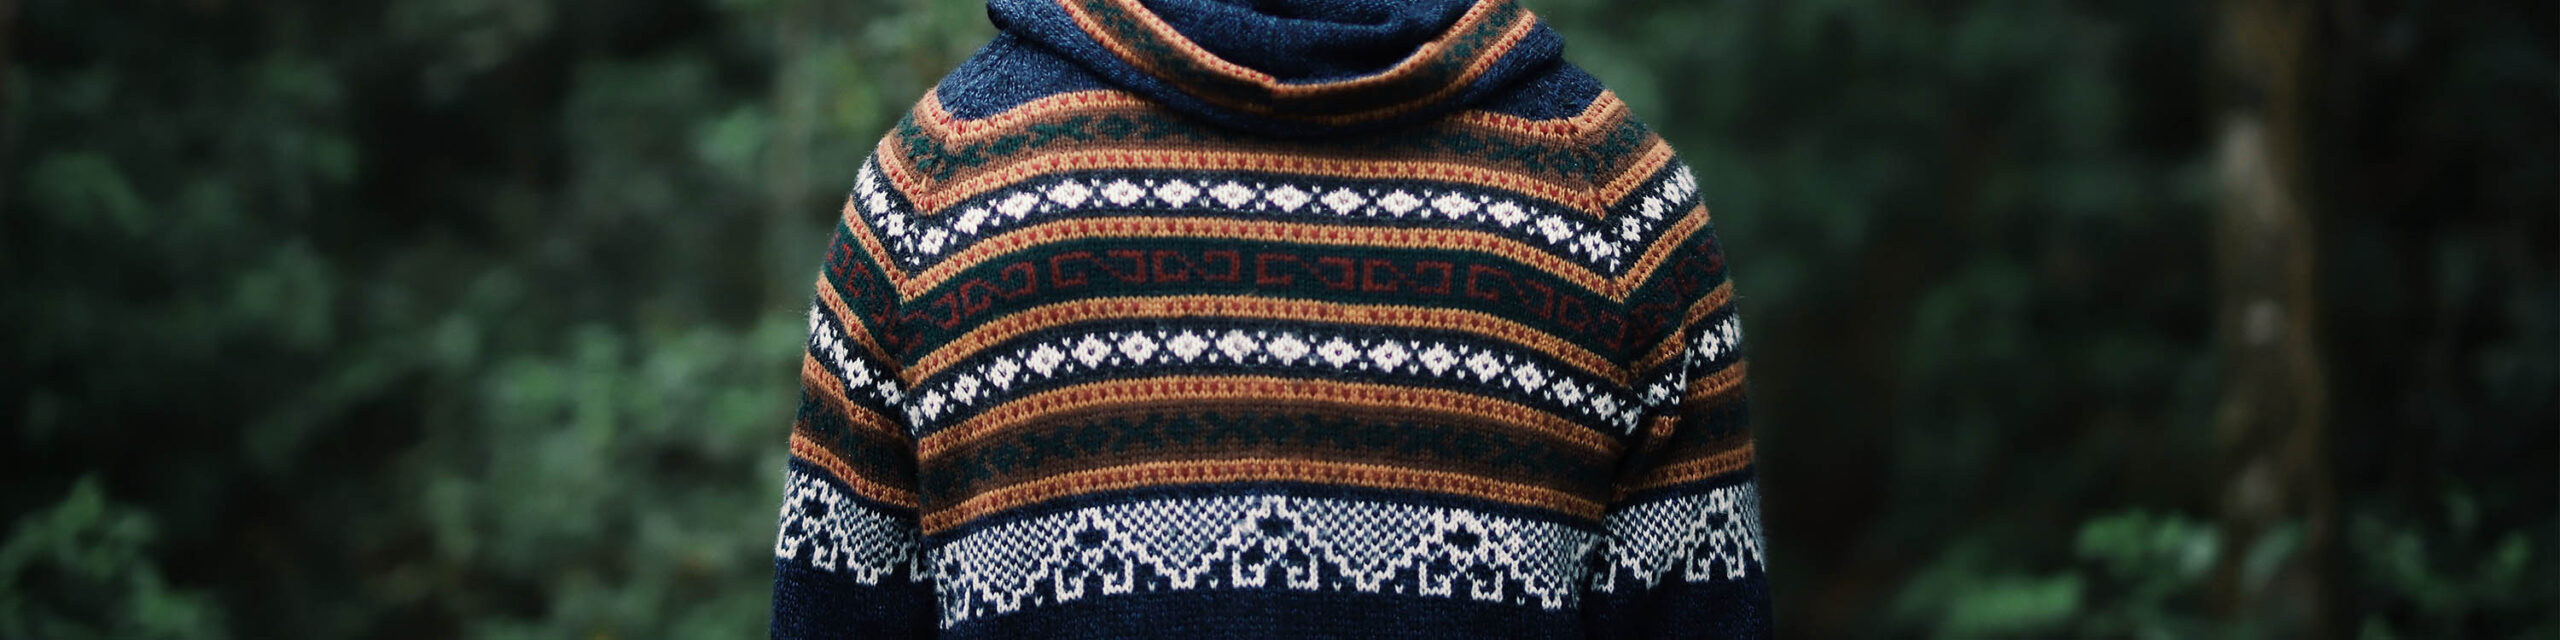 Orange and white knit winter men's sweater closeup